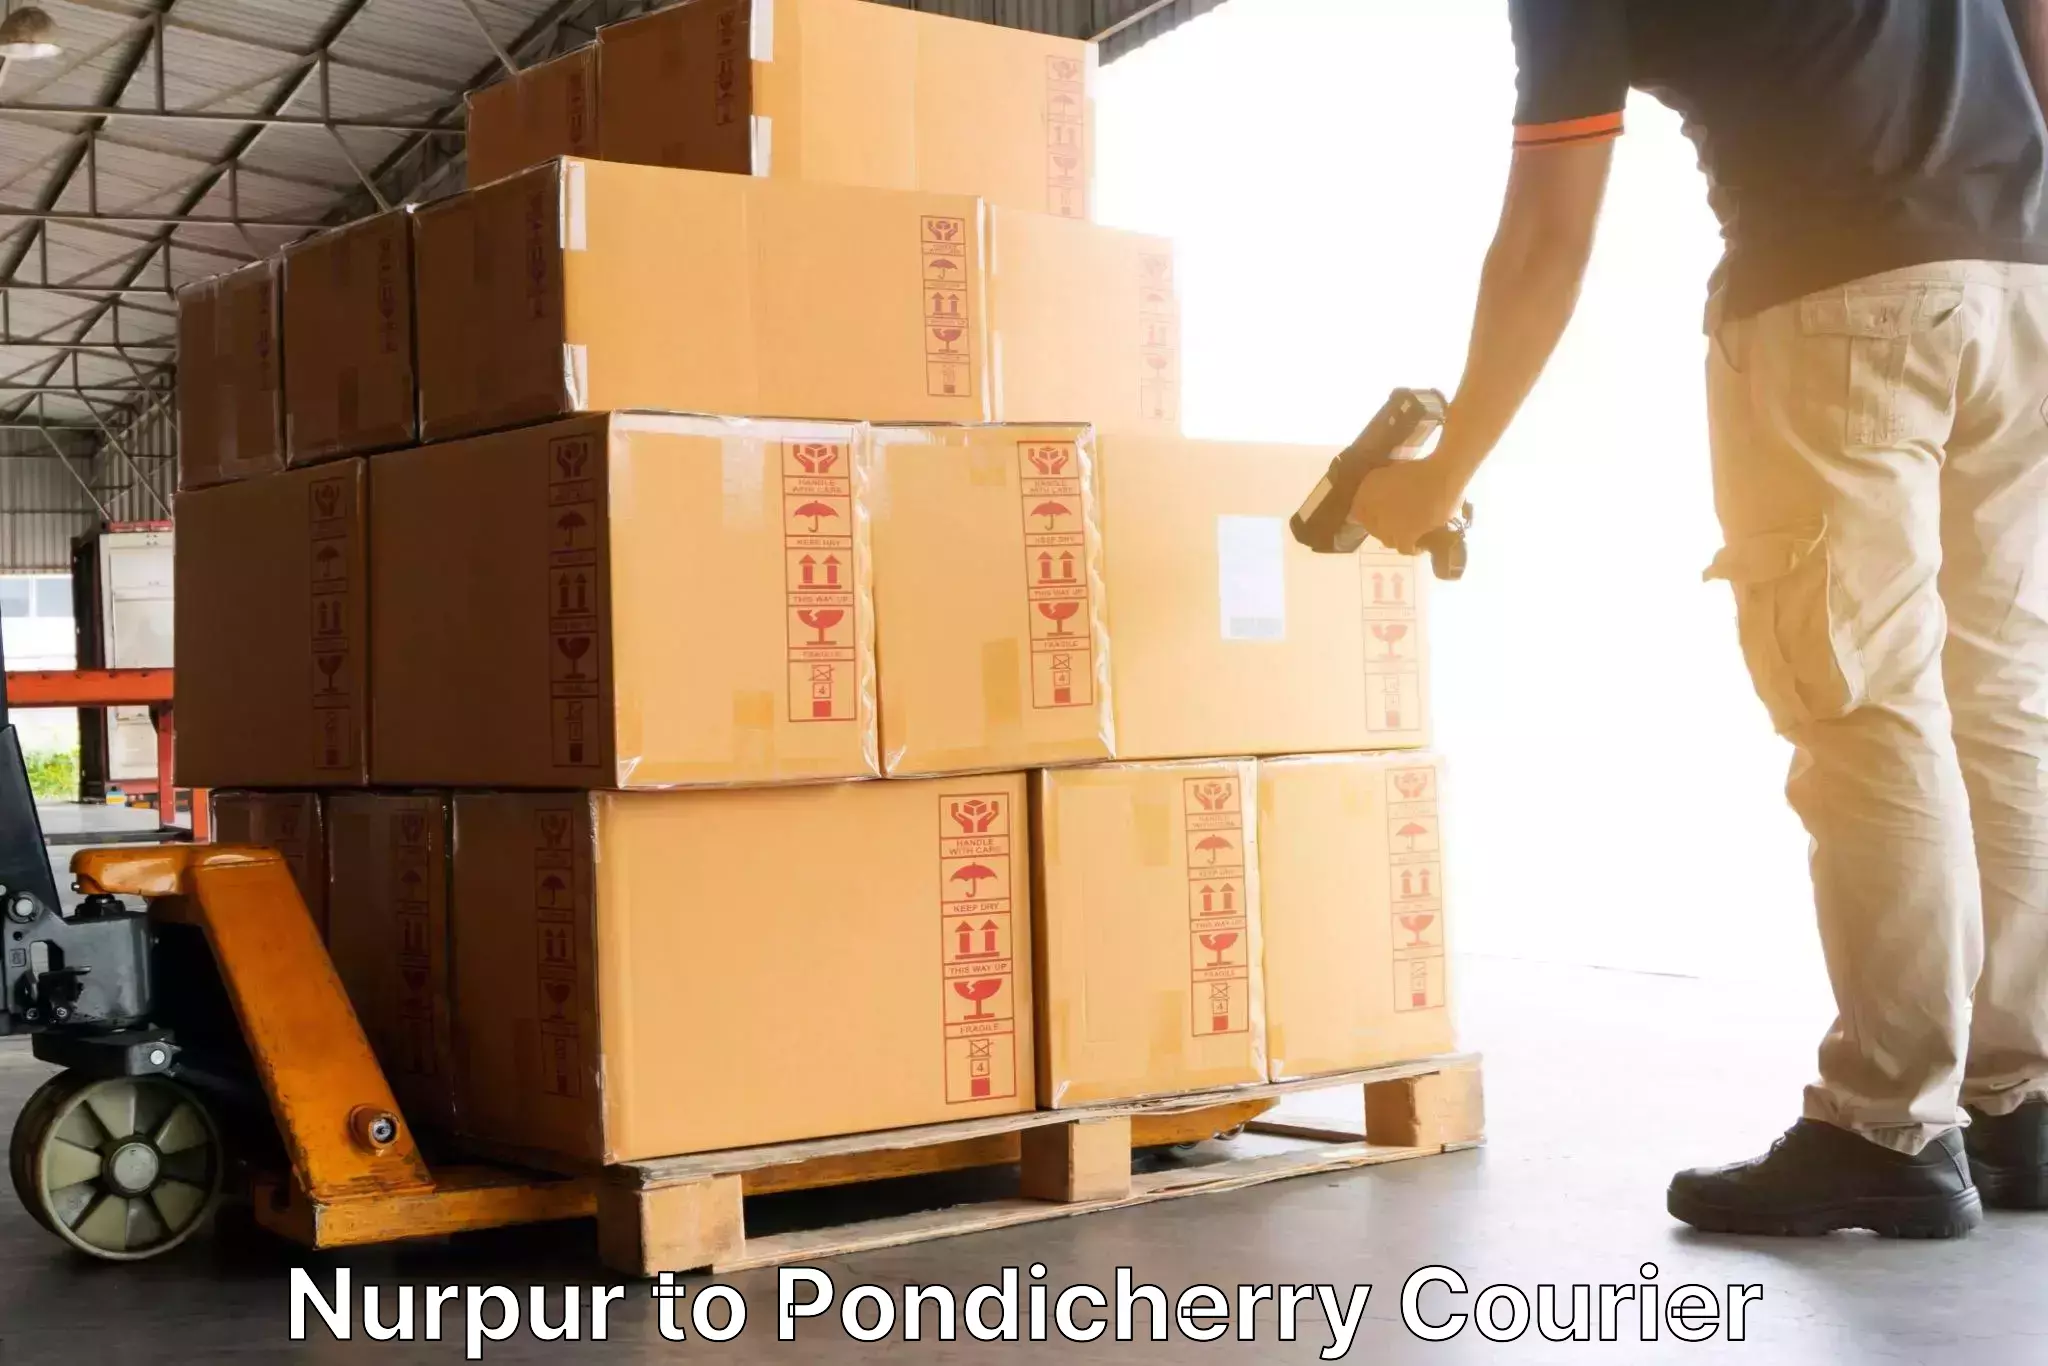 Express package handling Nurpur to Pondicherry